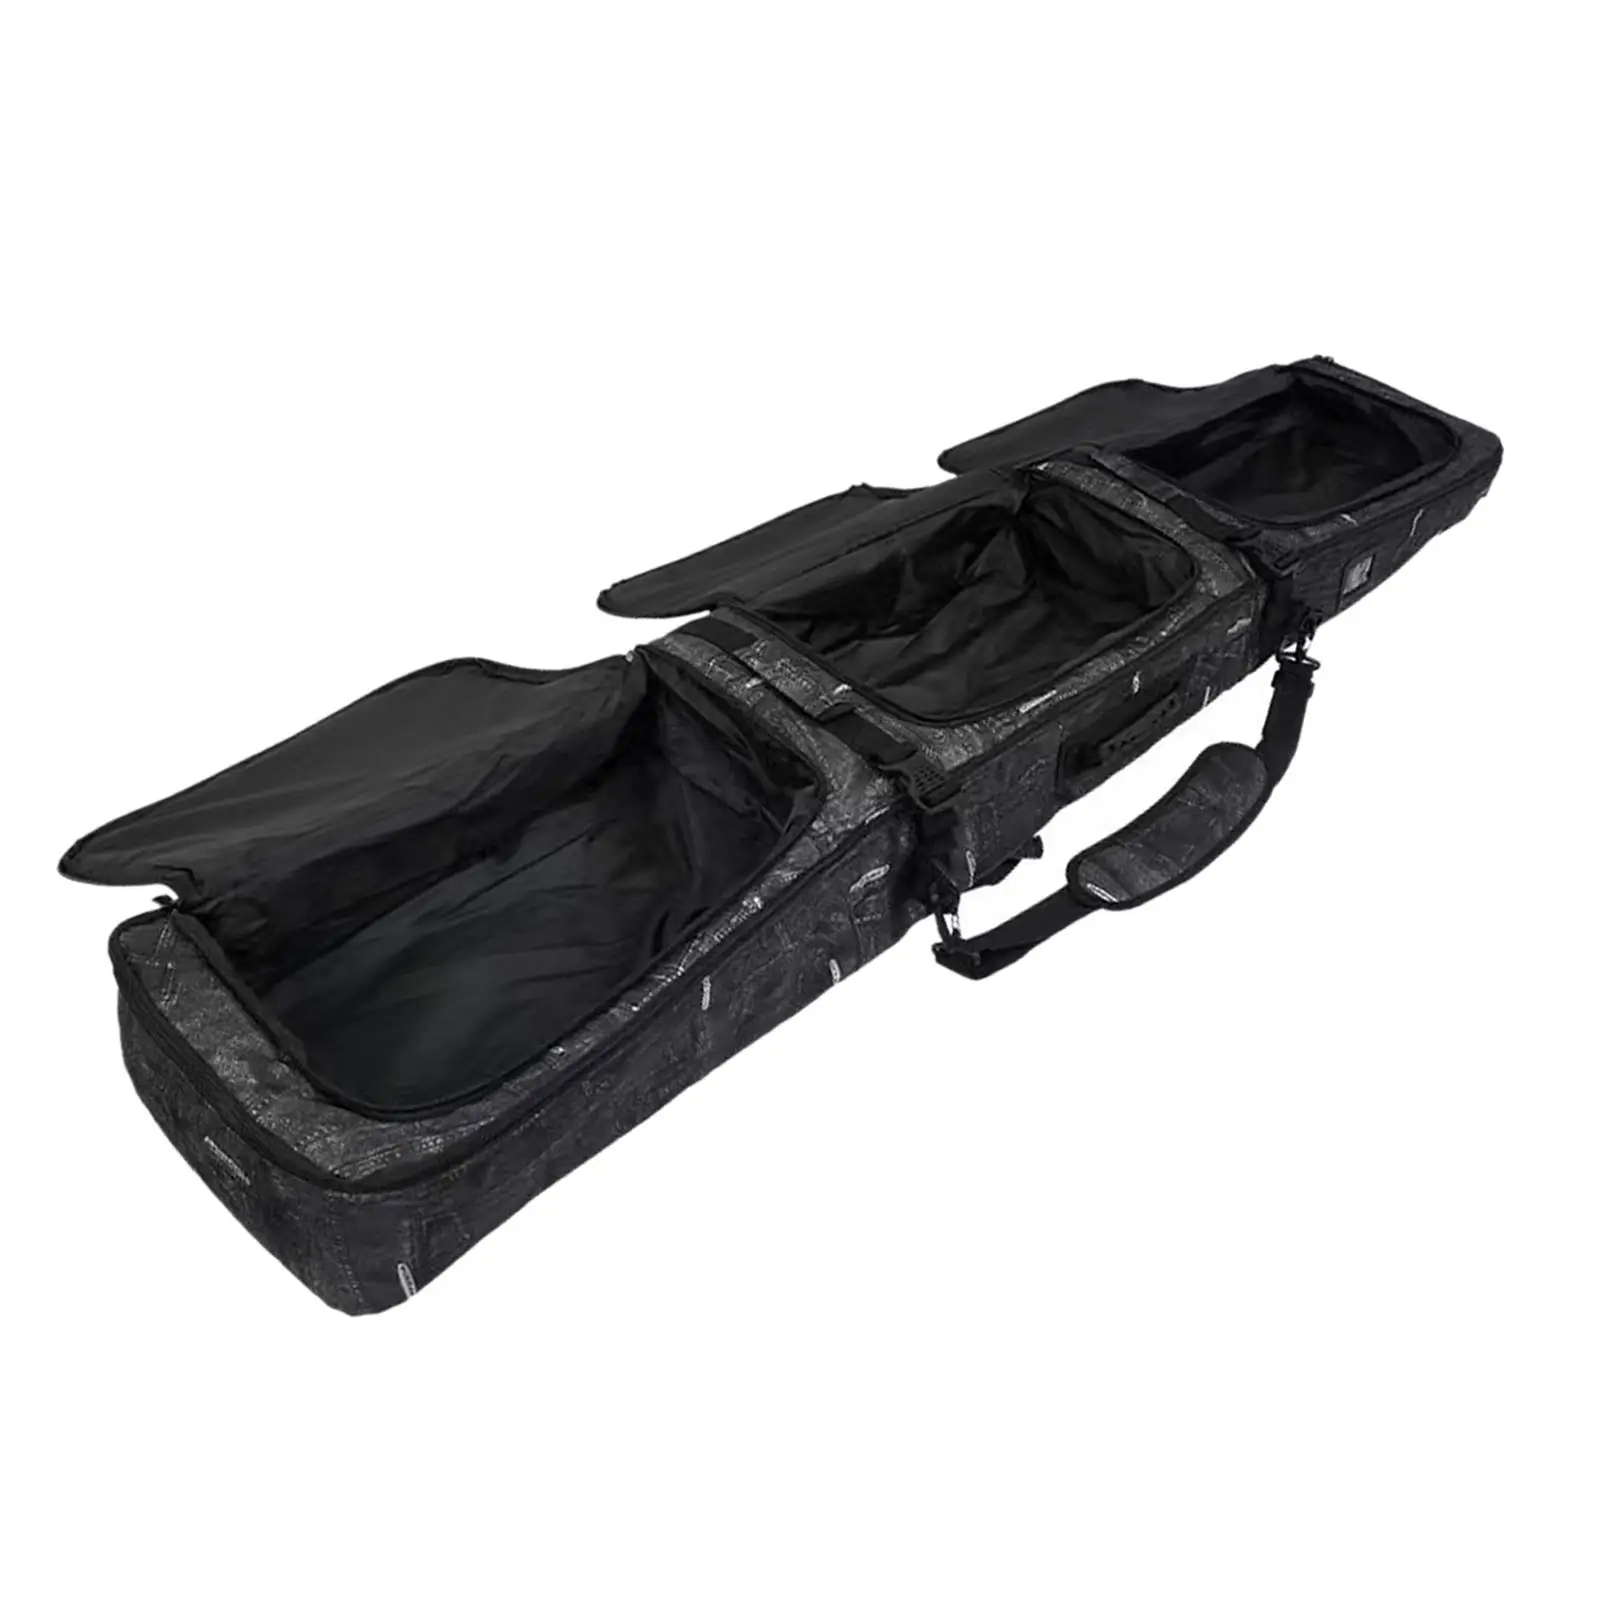 Snowboard Bag with Wheels Suitcase Snow Board Accessories Ski Storage Bag